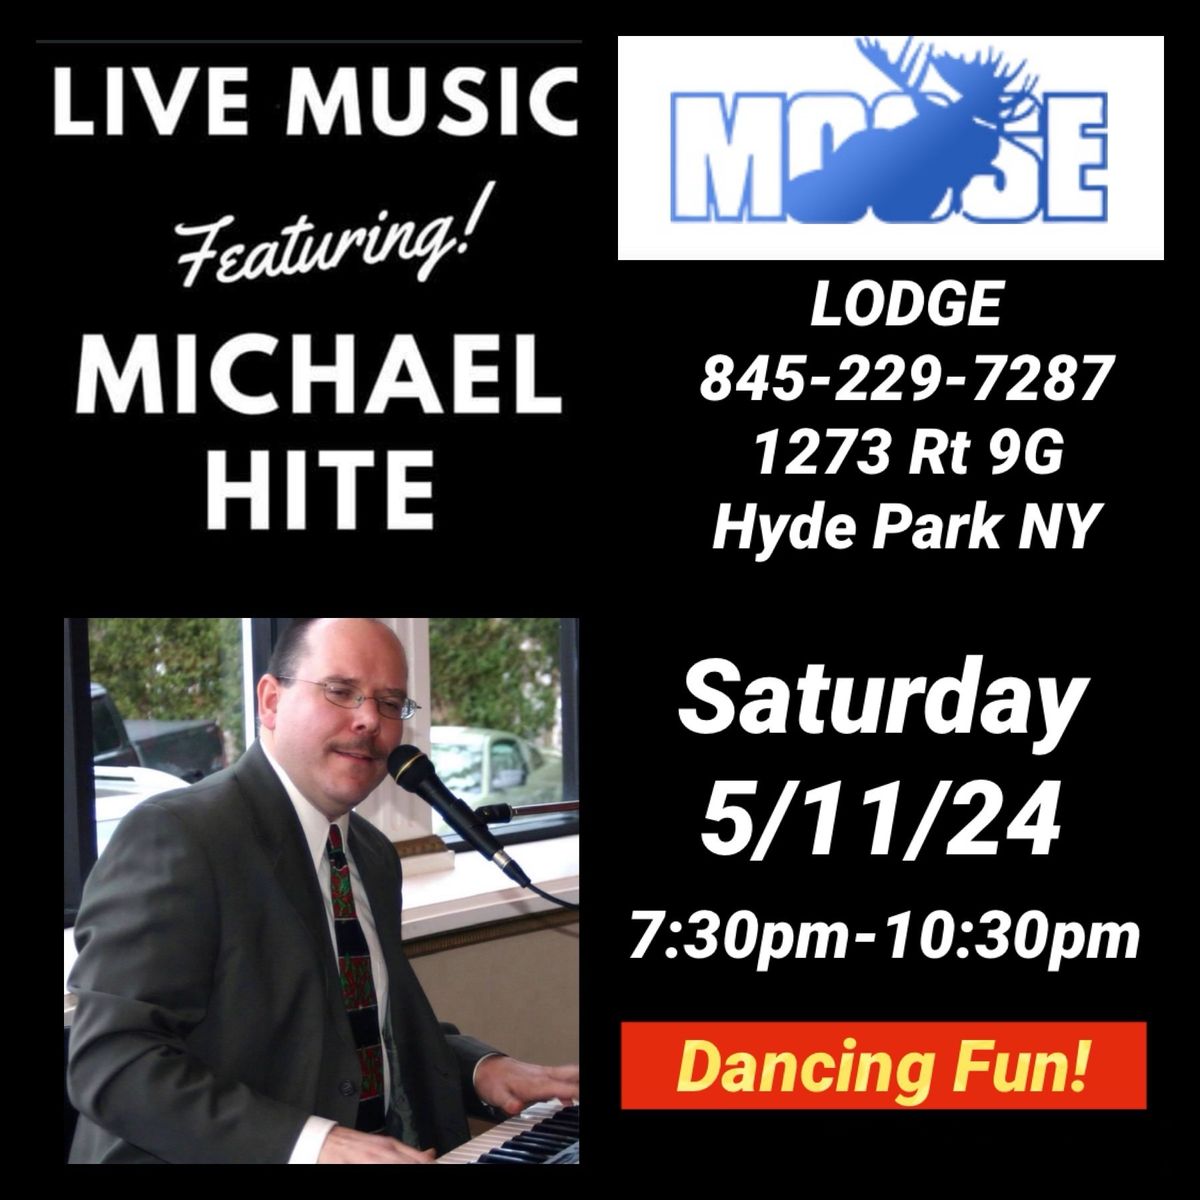 Michael Hite Live @ The Moose Lodge\u2019s Dinner Dance!